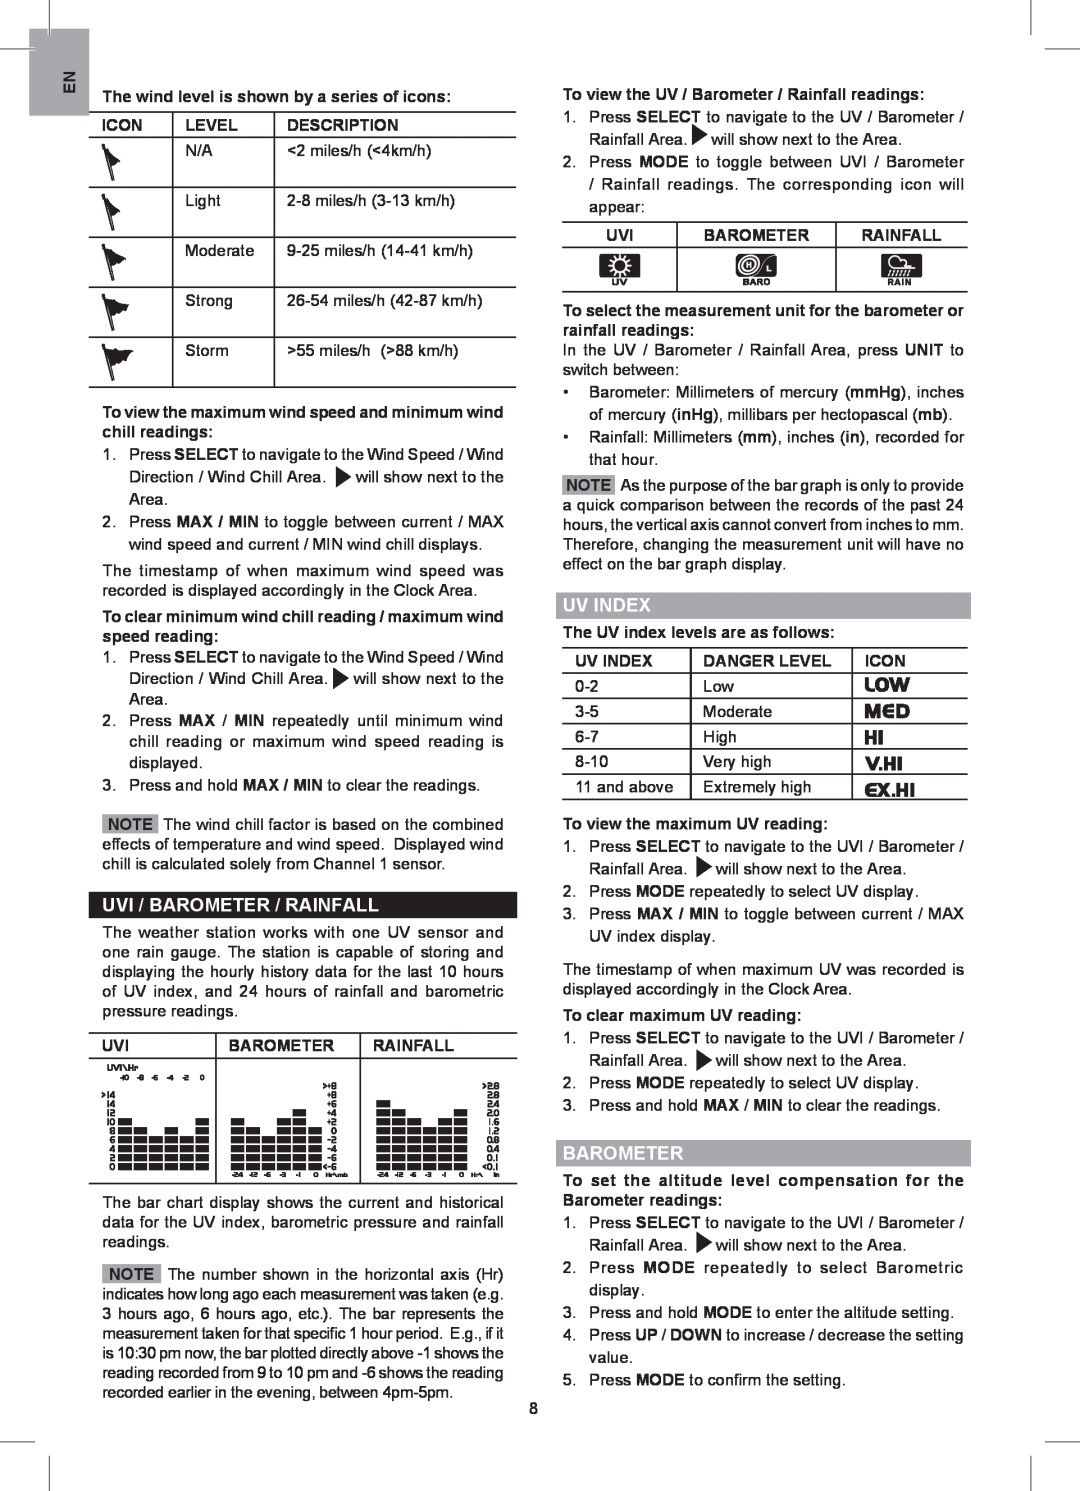 Oregon Scientific WMR88A user manual Uvi / Barometer / Rainfall, Uv Index 